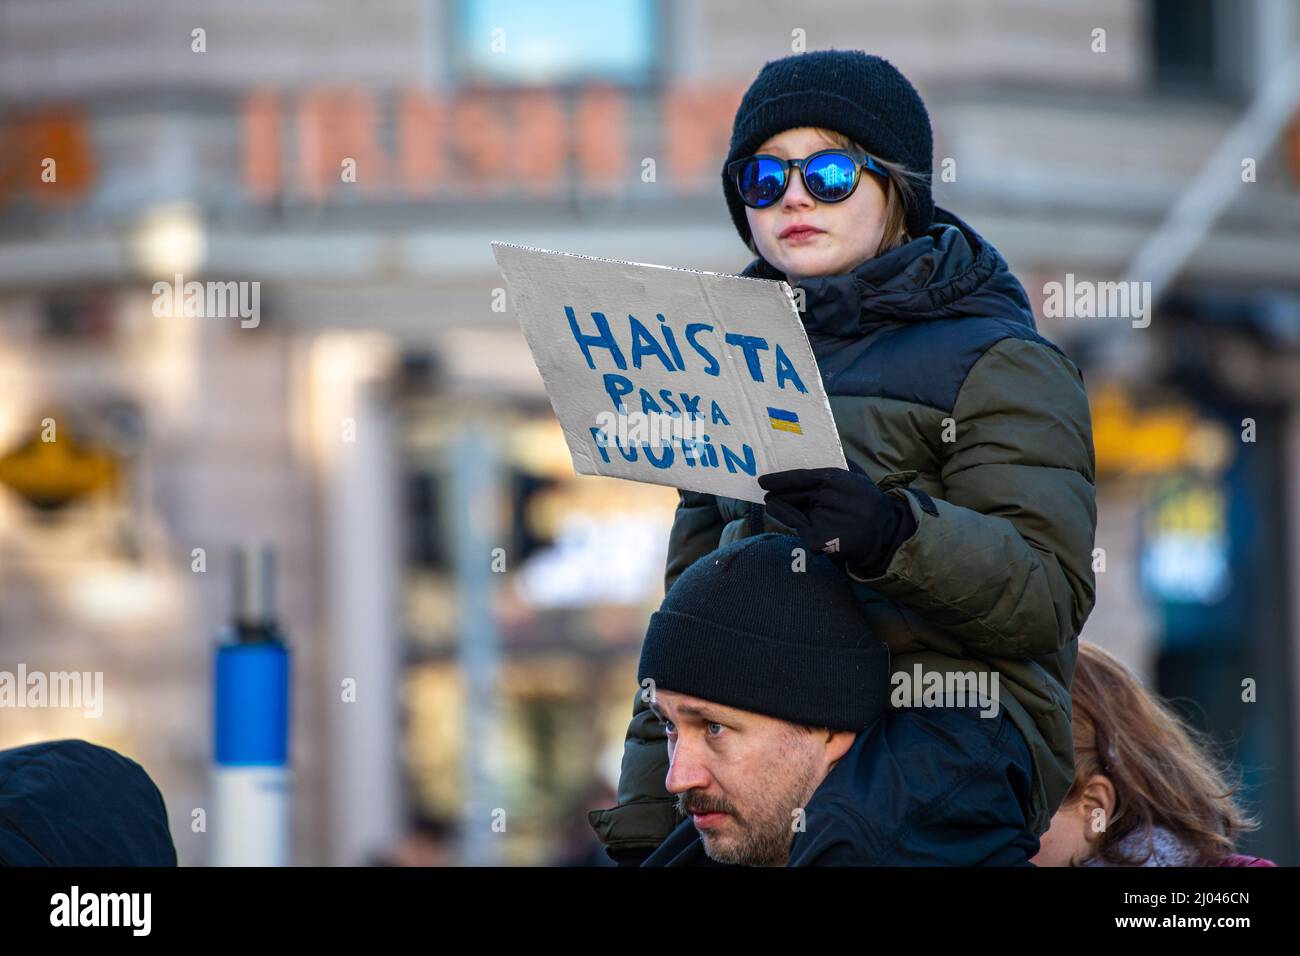 Haista paska Puuttin. Niño con un cartel de cartón en protesta contra la invasión de Ucrania. Helsinki, Finlandia. Foto de stock